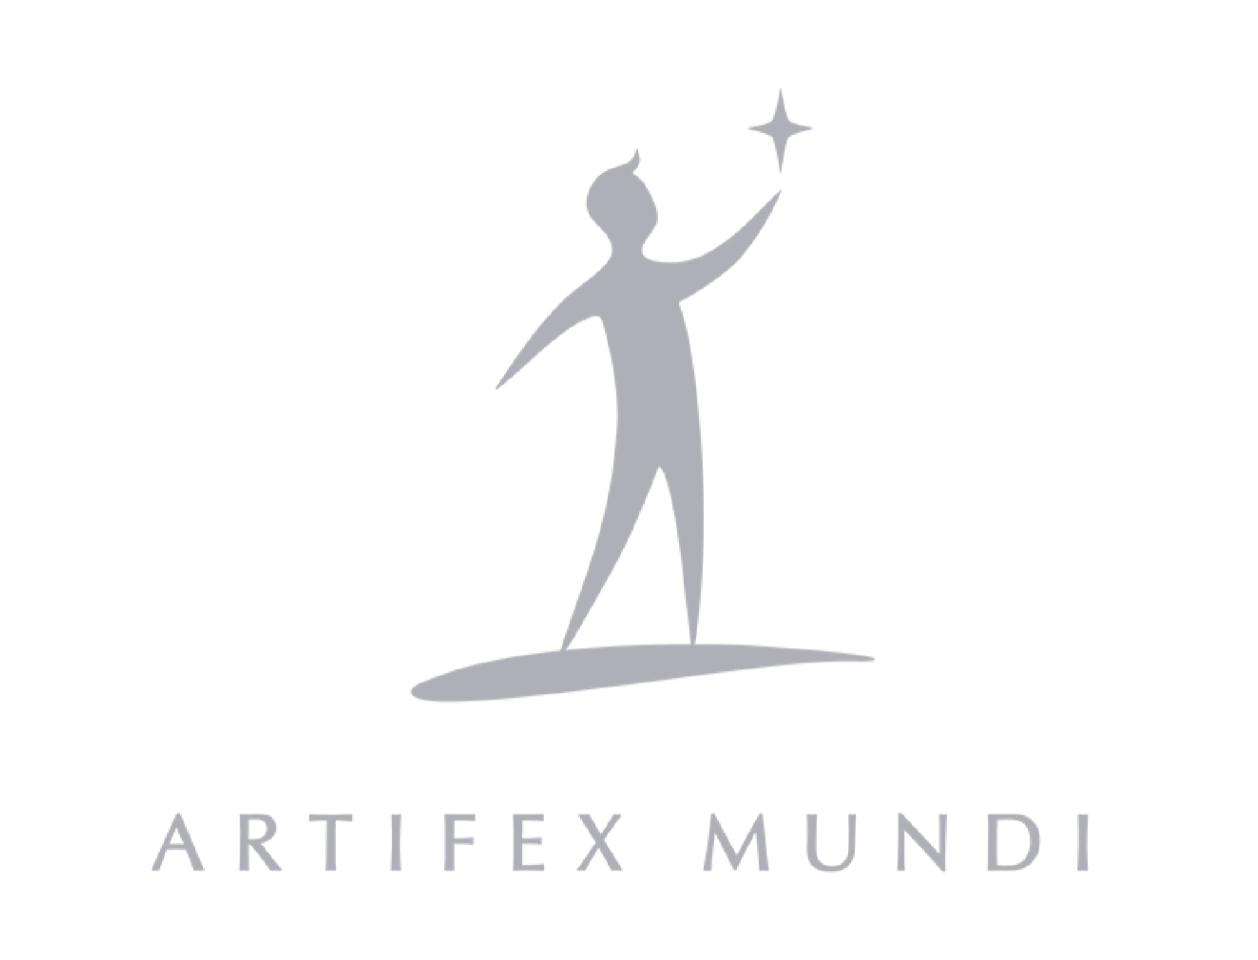 Artifex Mundi GameDev logo - trusted partners of 8Bit gaming industry recruitment agency